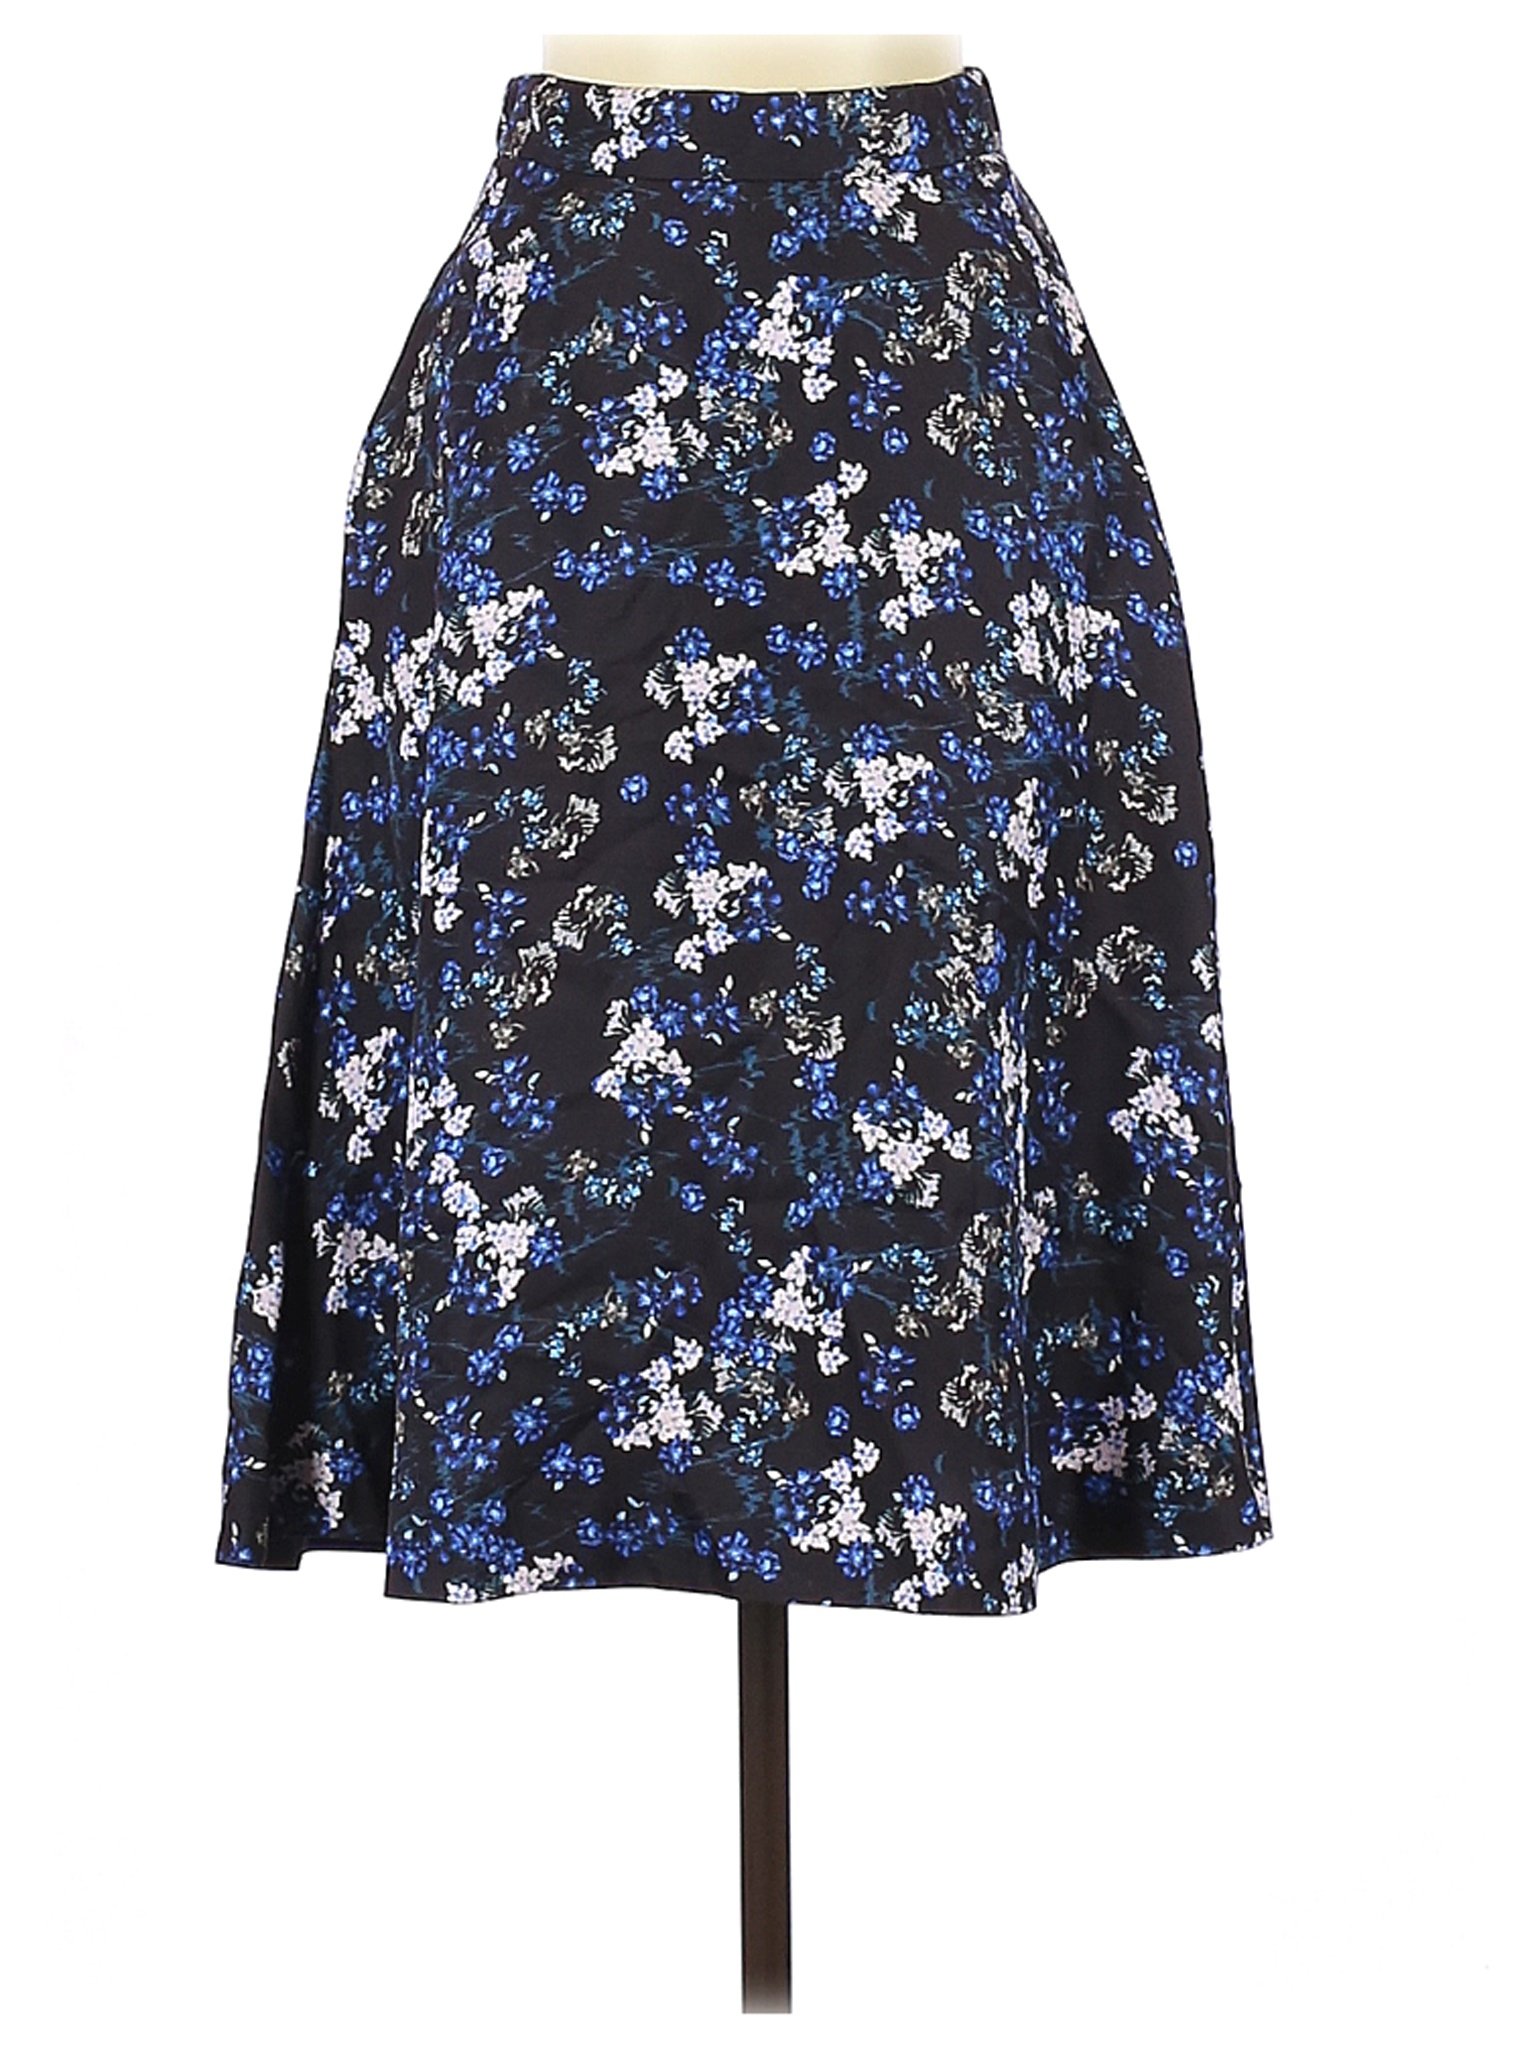 J.Crew Collection Women Blue Silk Skirt 00 | eBay